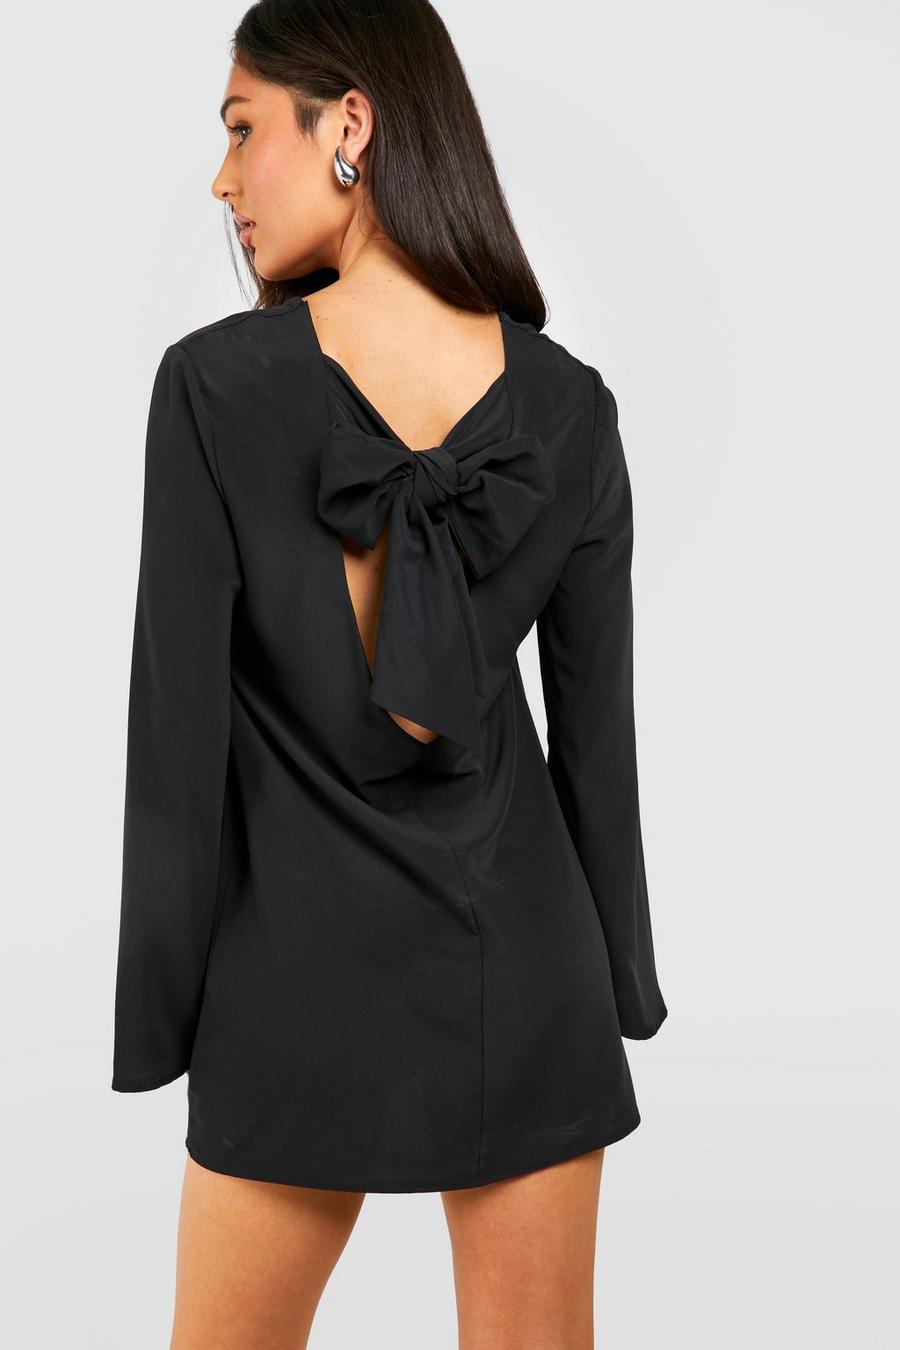 Black Lace Sleeve Blazer Dress 